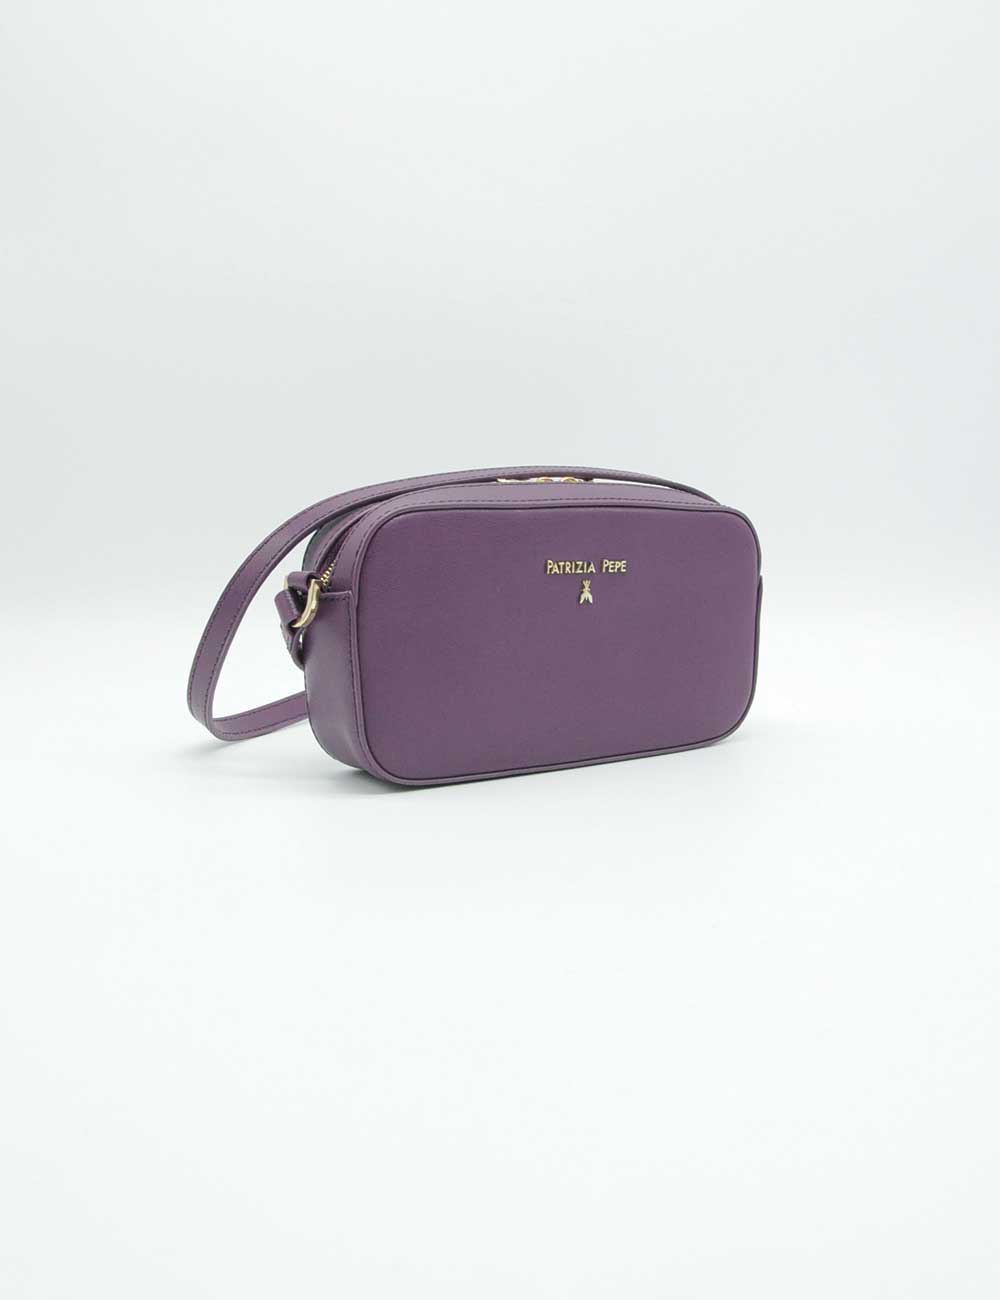 Patrizia Pepe Futuristic Purple Shoulder Bag